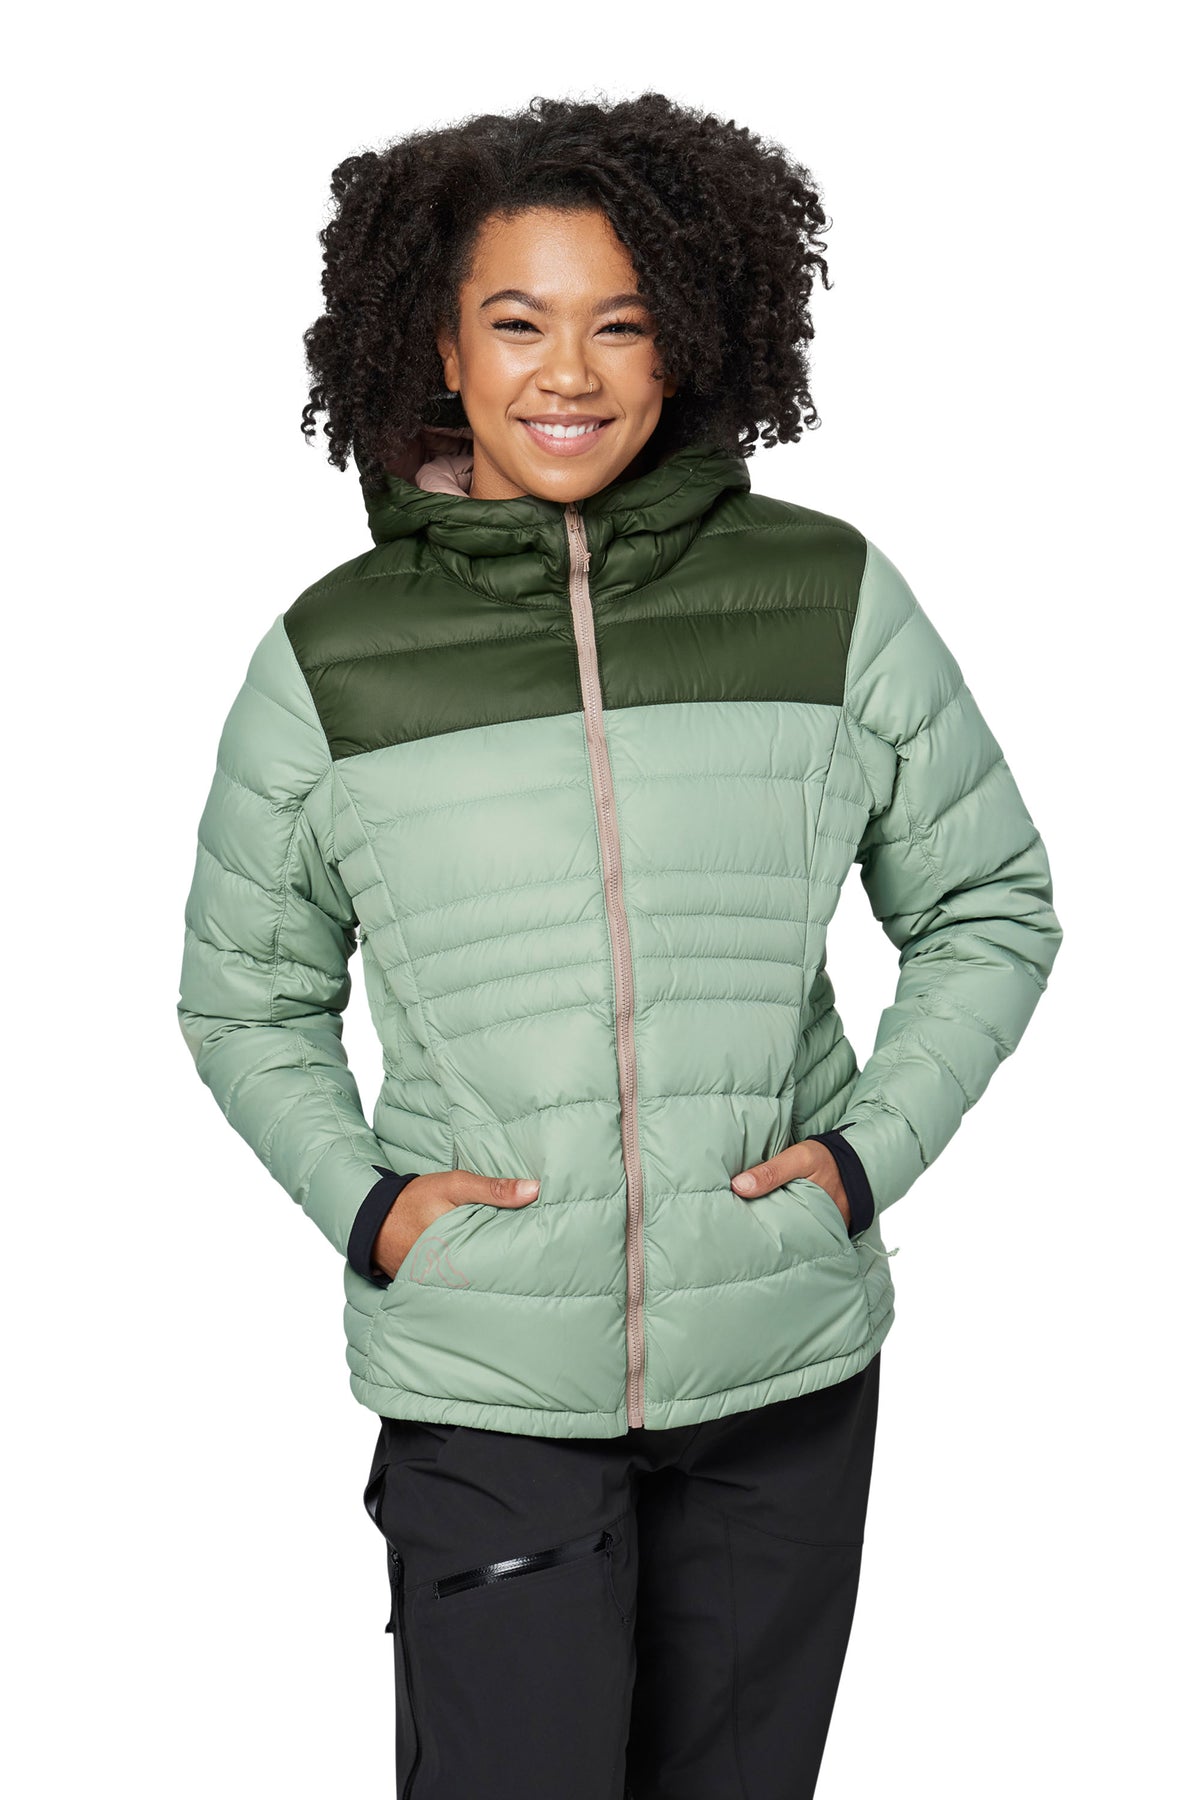 Women's Staci Ski Jacket, Ski & snowboard jackets